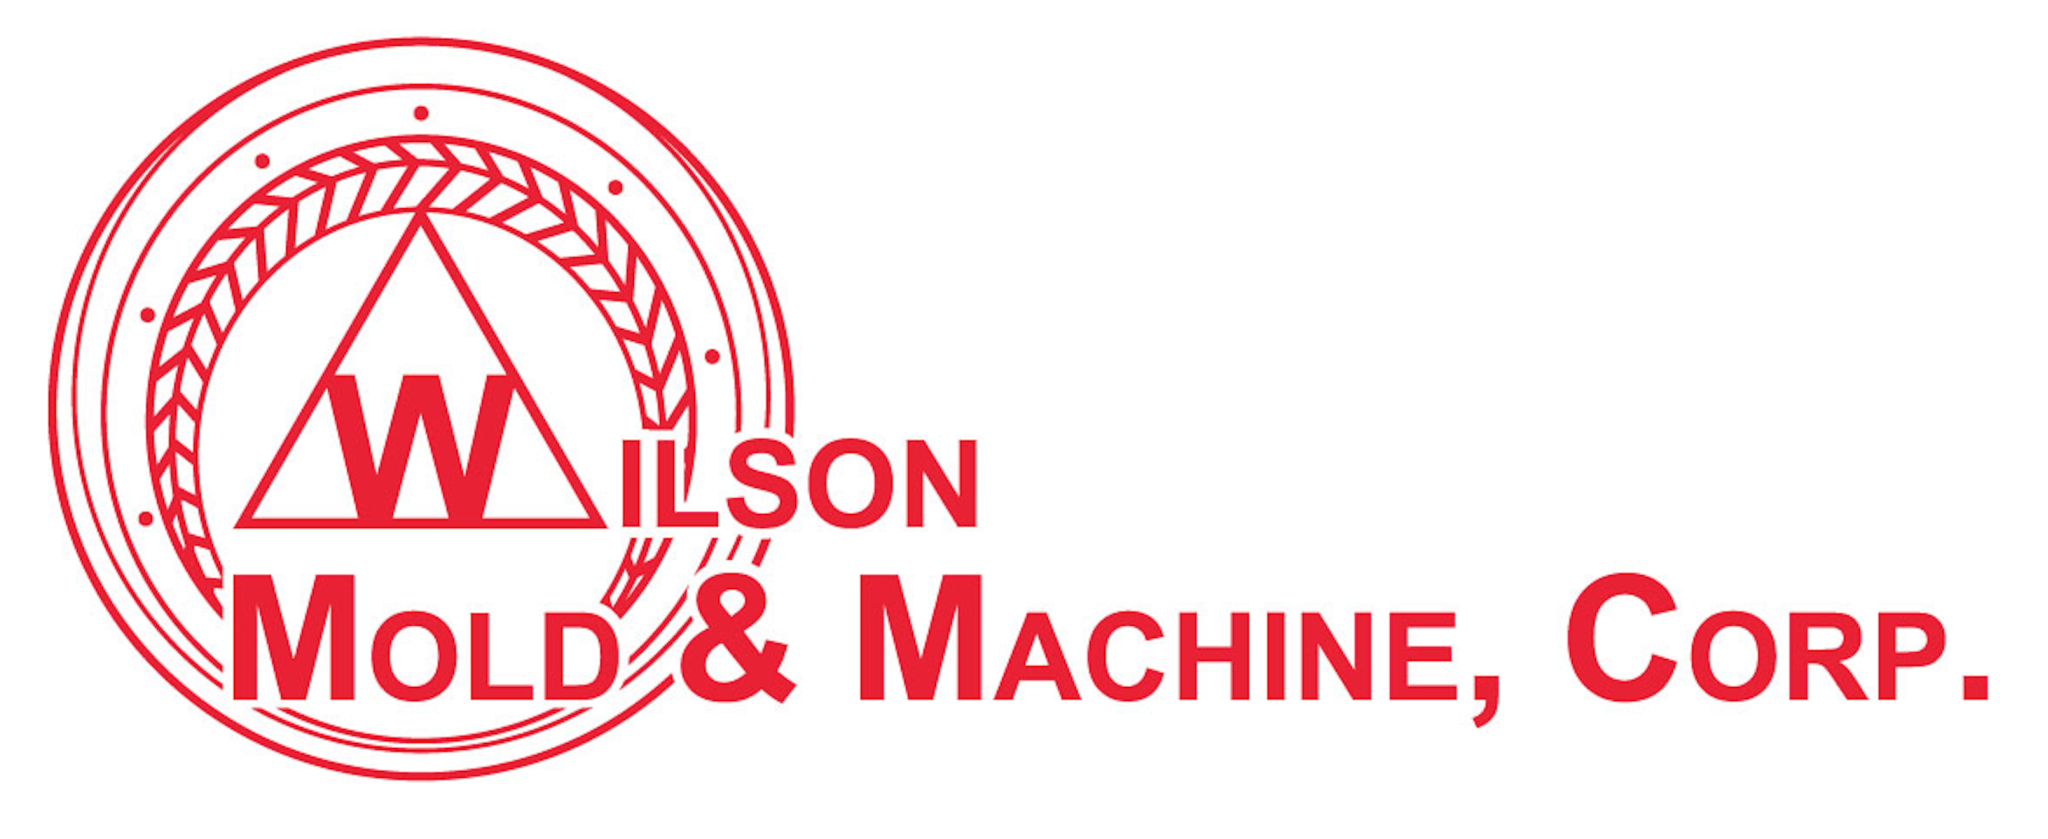 Wilson Mold & Machine